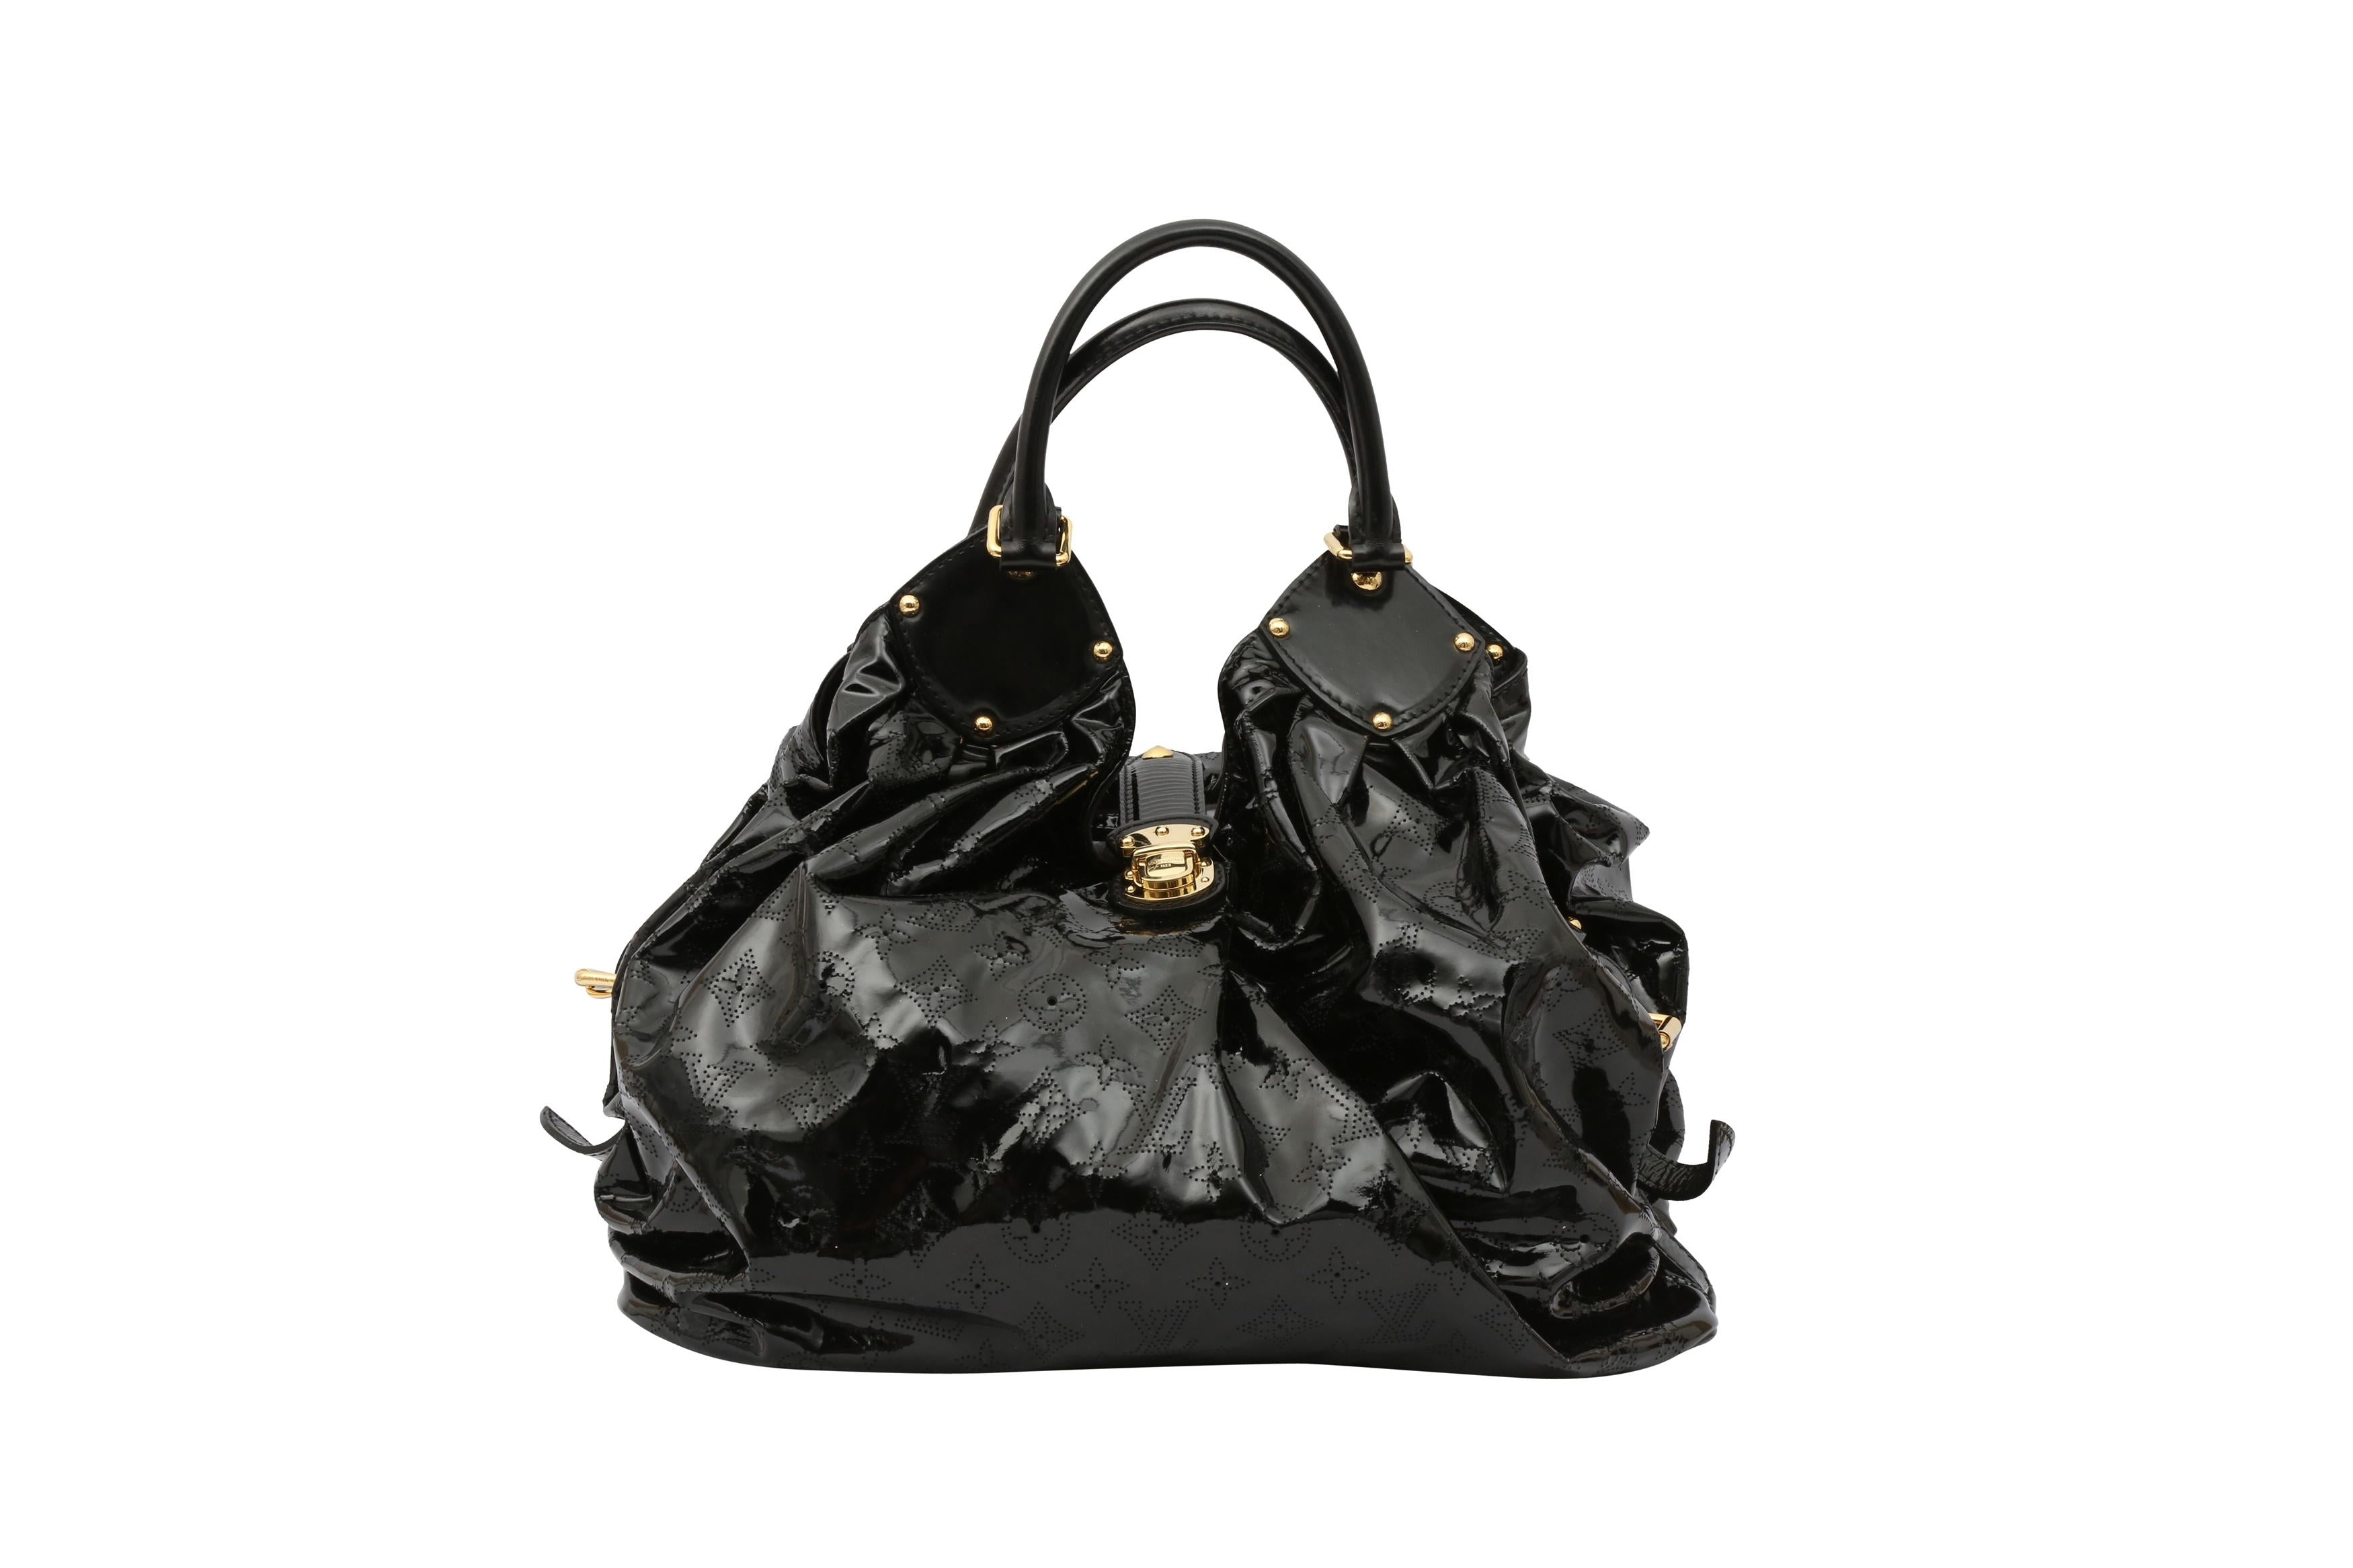 Louis Vuitton Authenticated Flower Hobo Handbag